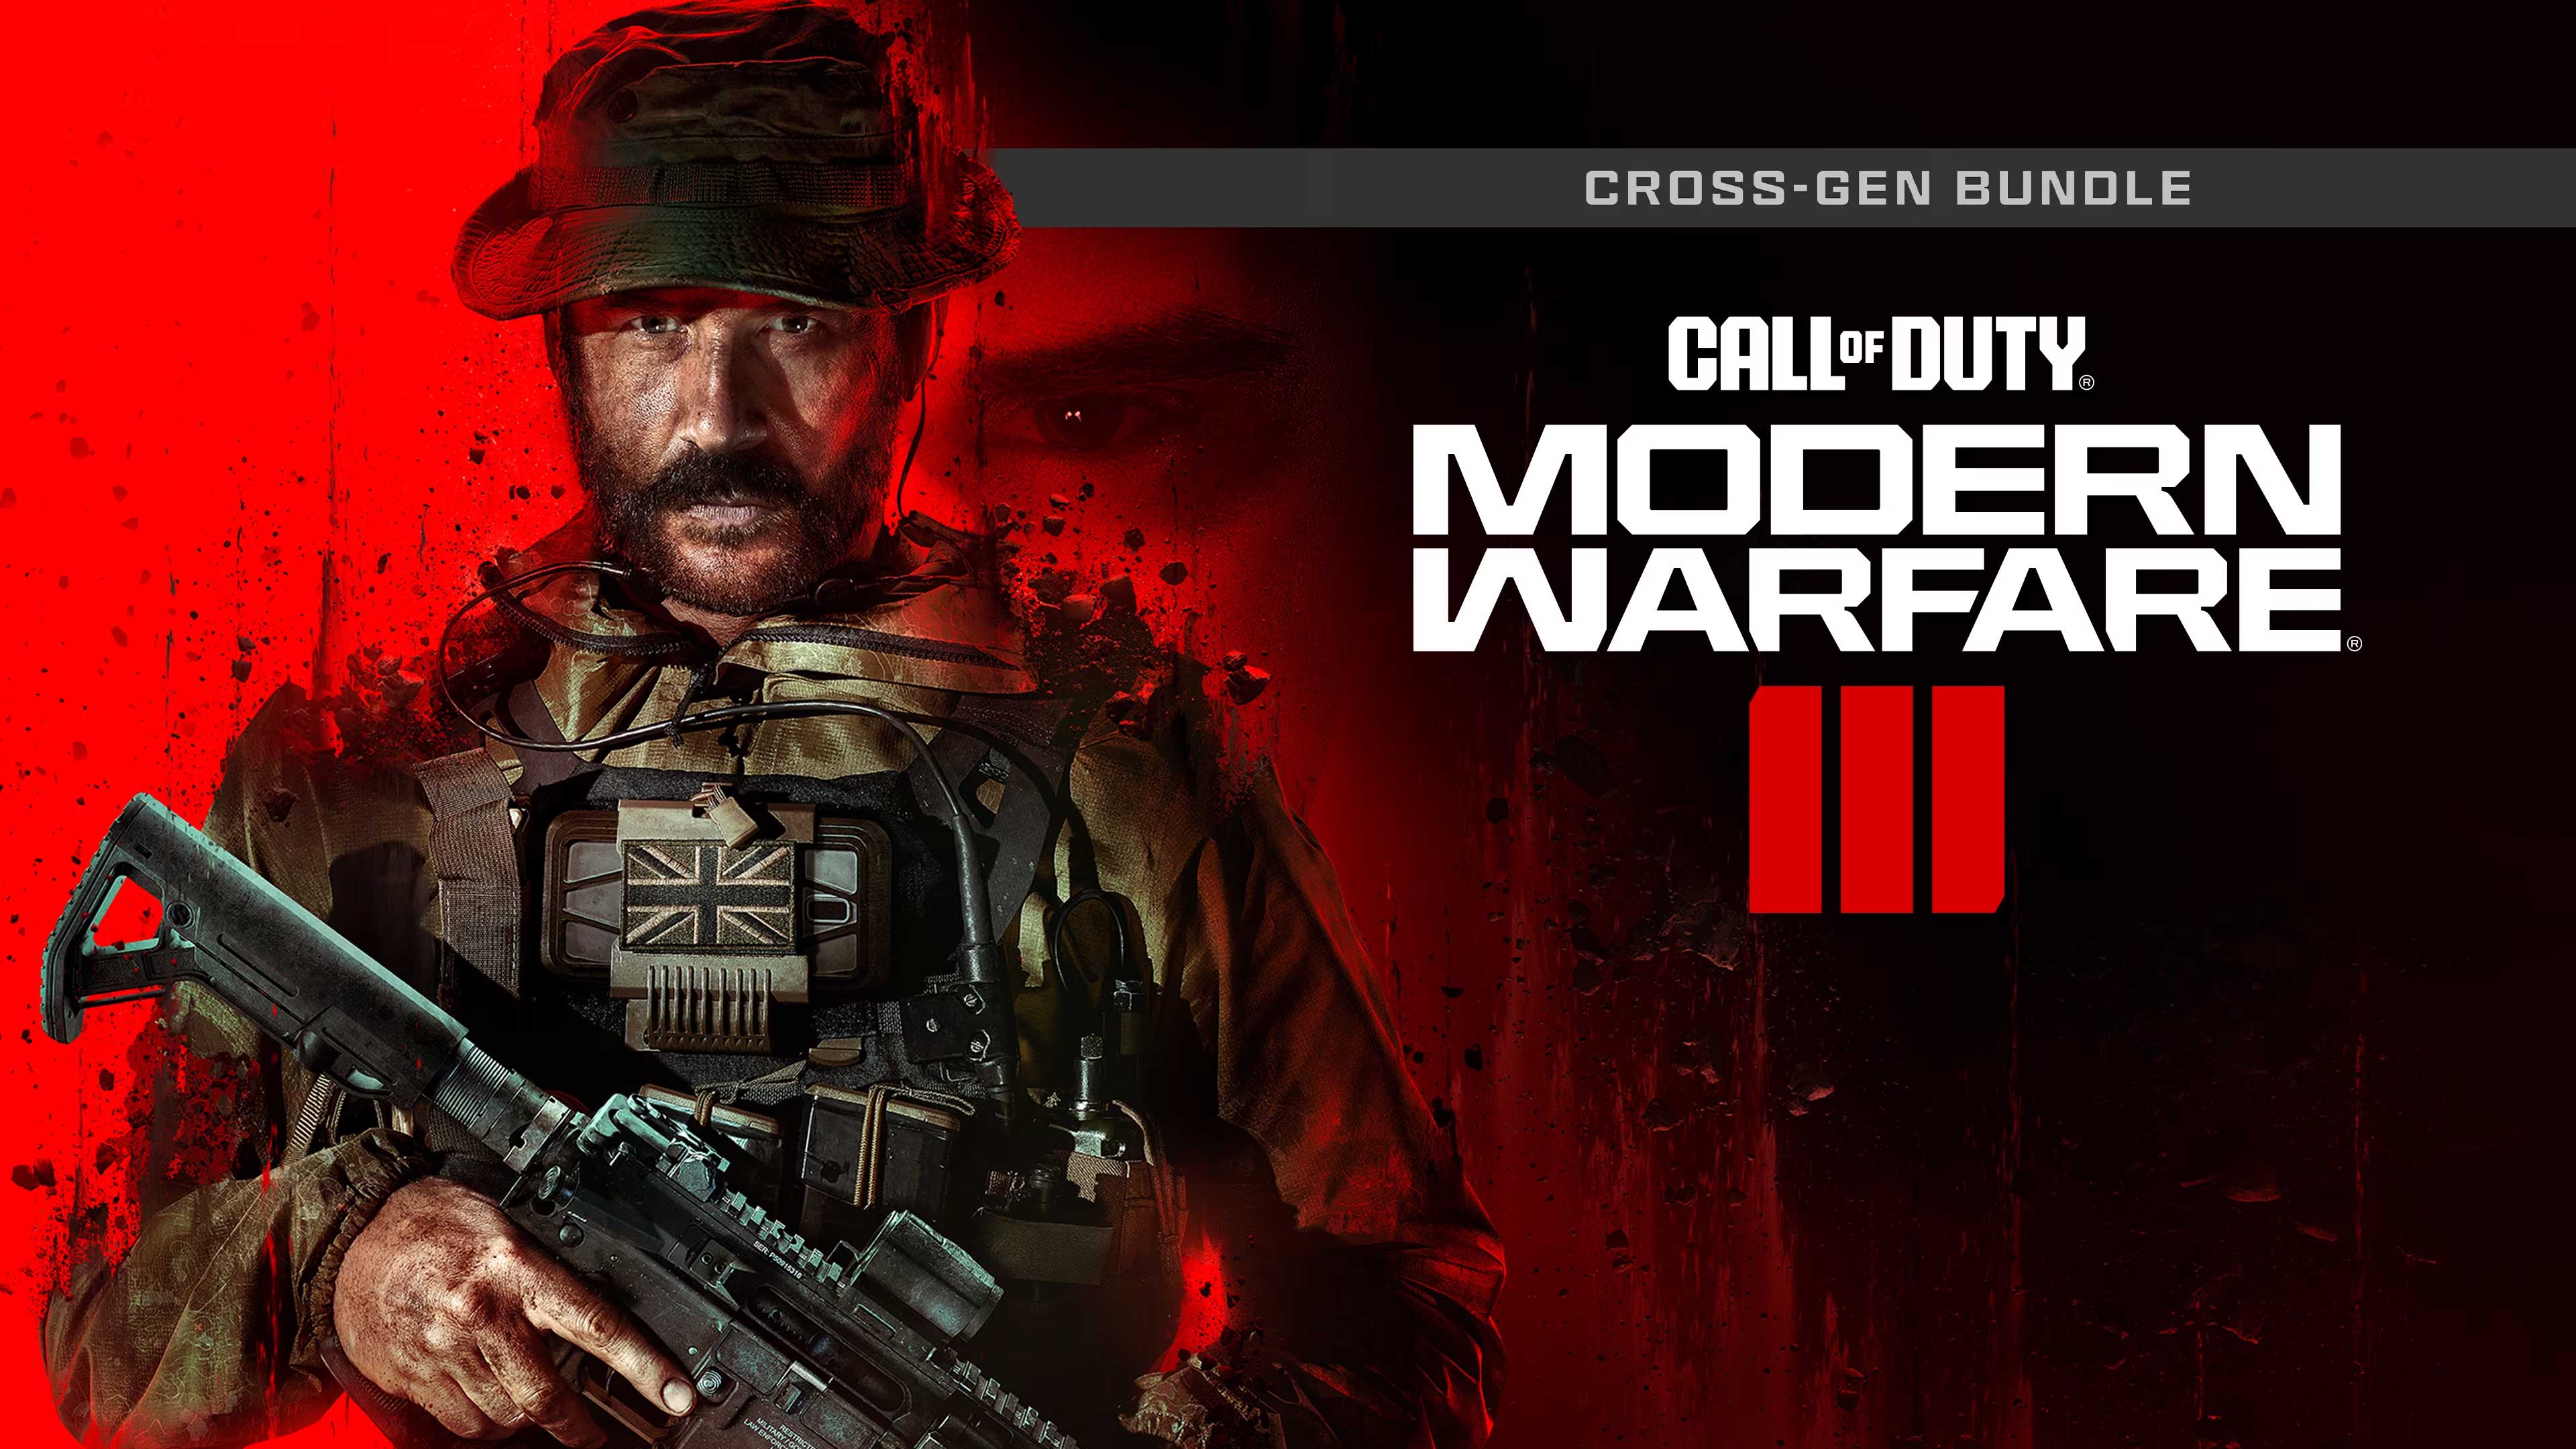 Call of Duty: Modern Warfare III - Cross-Gen Bundle, The Gamers Fate, thegamersfate.com